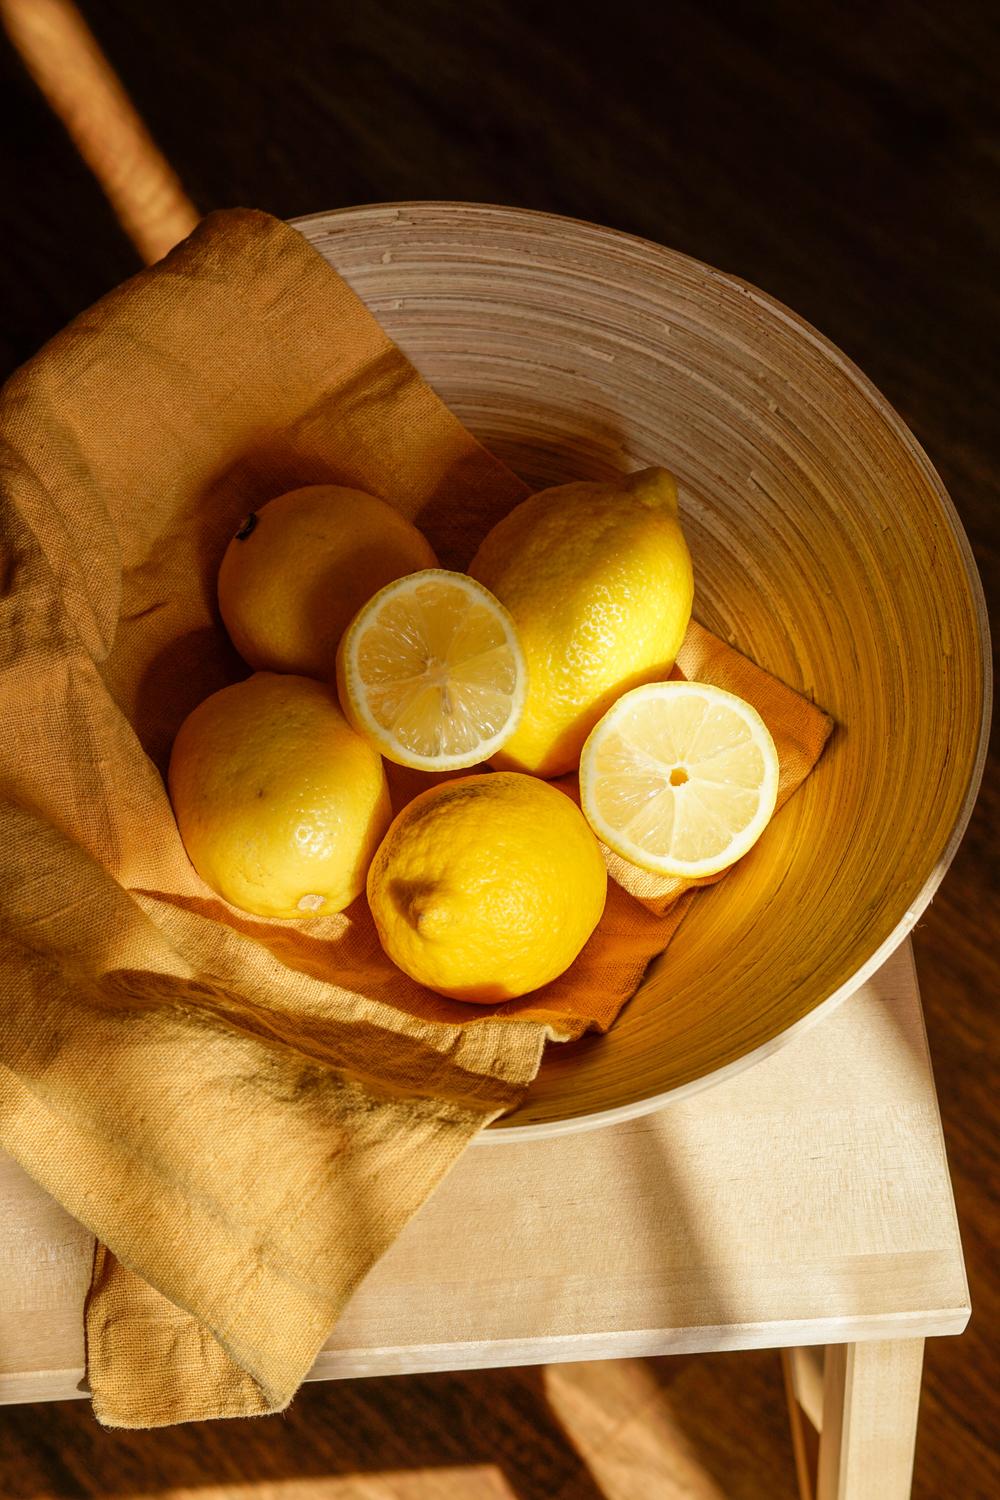 Lemon Eureka - Export and sale of lemons - Citricos Murcia